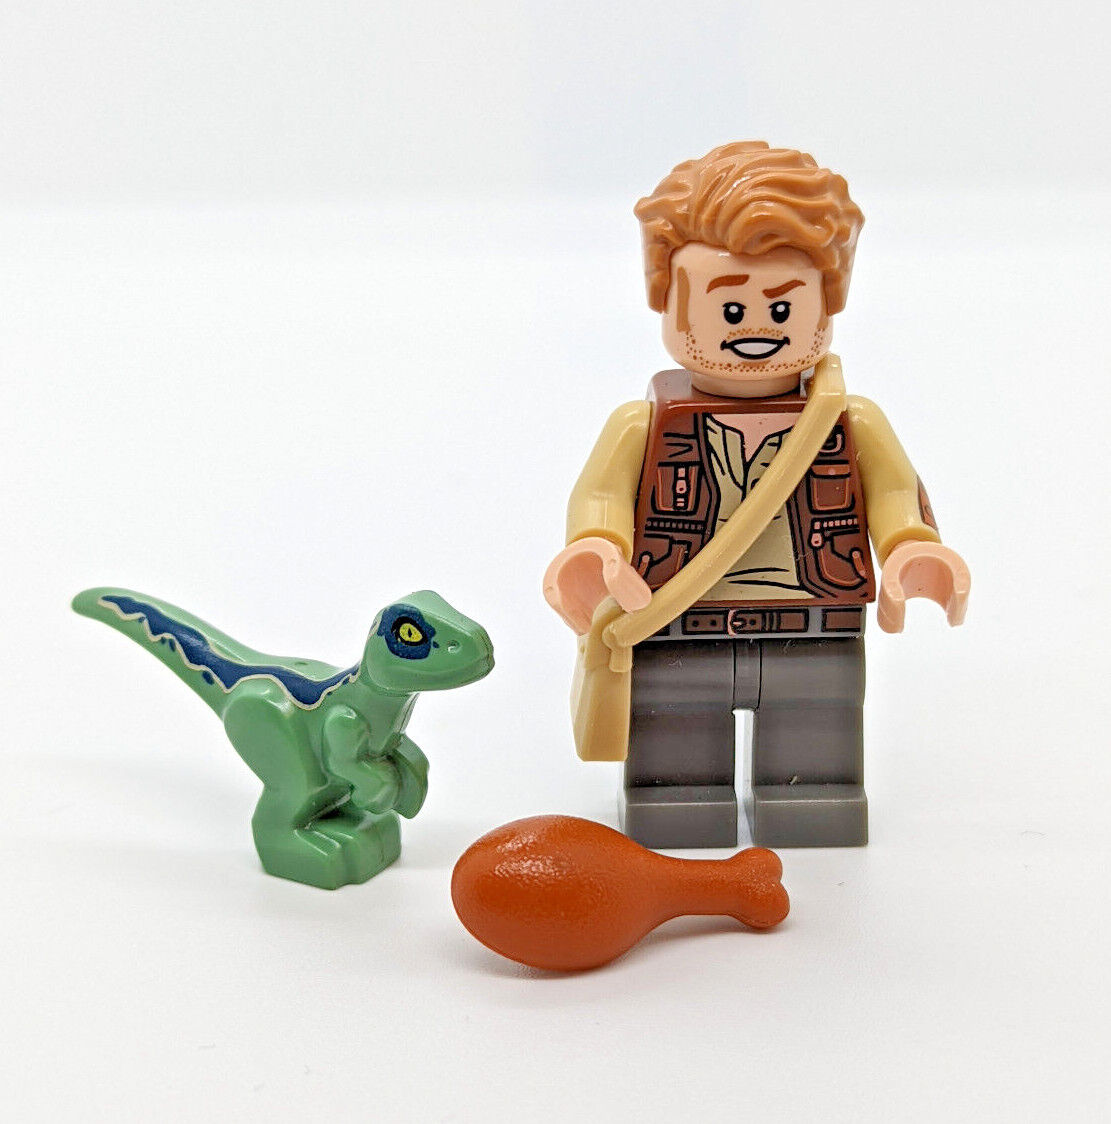 Lego Jurassic World Owen Grady w/ Pouch and Blue Minifigure (5005255 Bricktober)